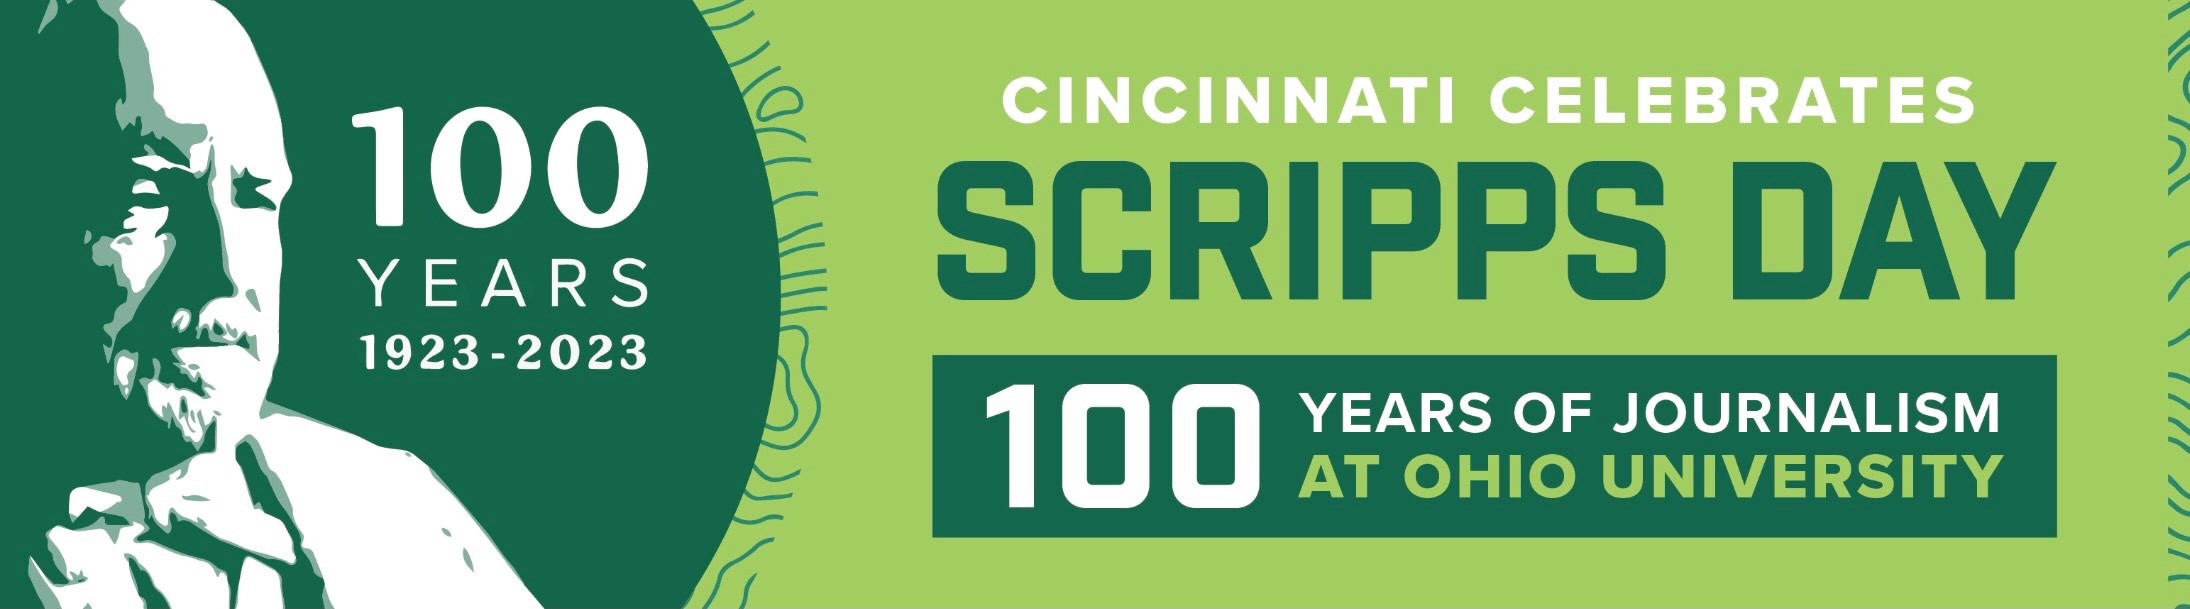 Cincinnati Celebrates Scripps Day - 100 Years of Journalism at Ohio University